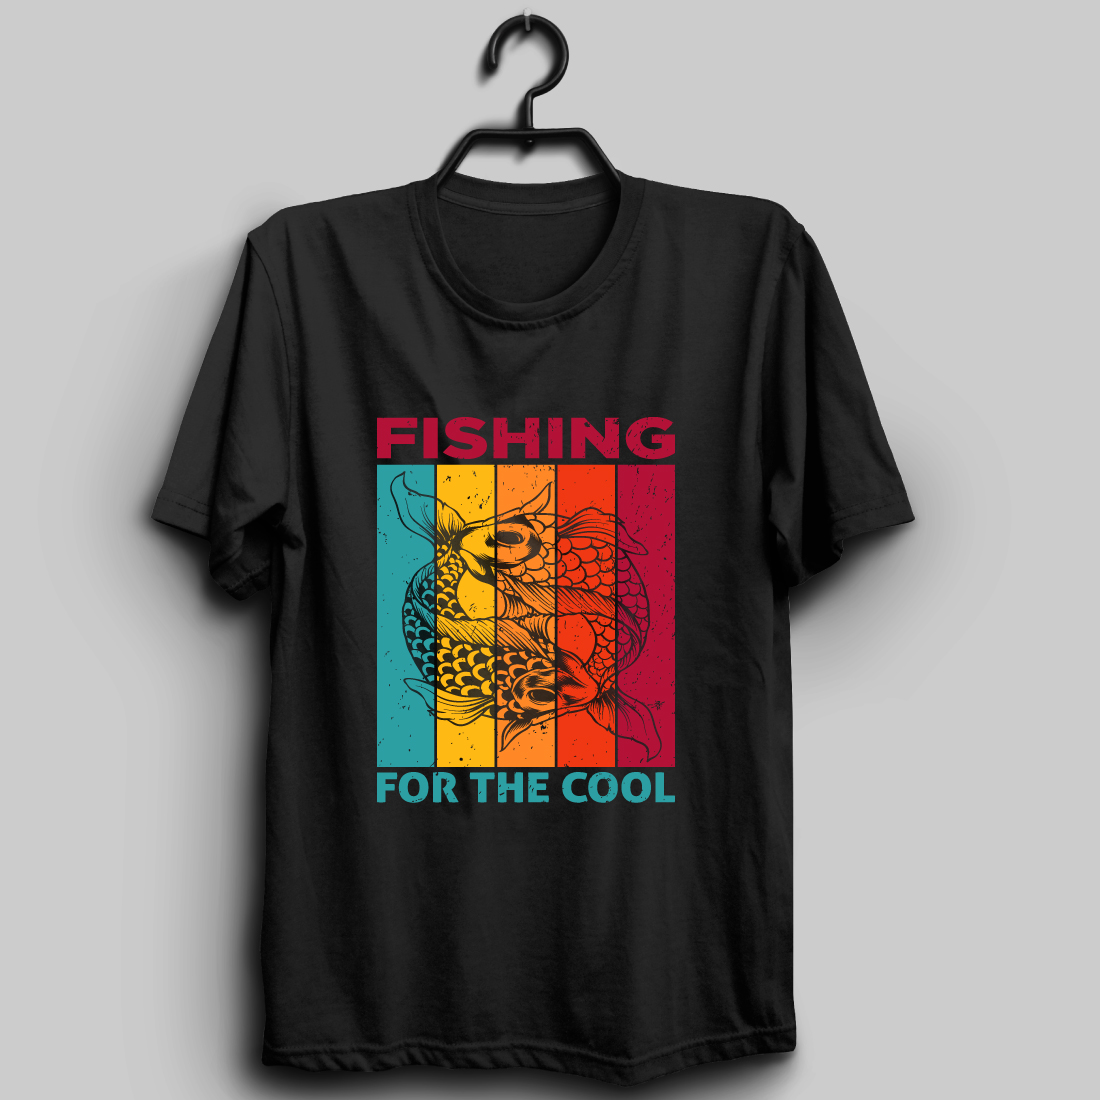 fishing t shirt design01 561